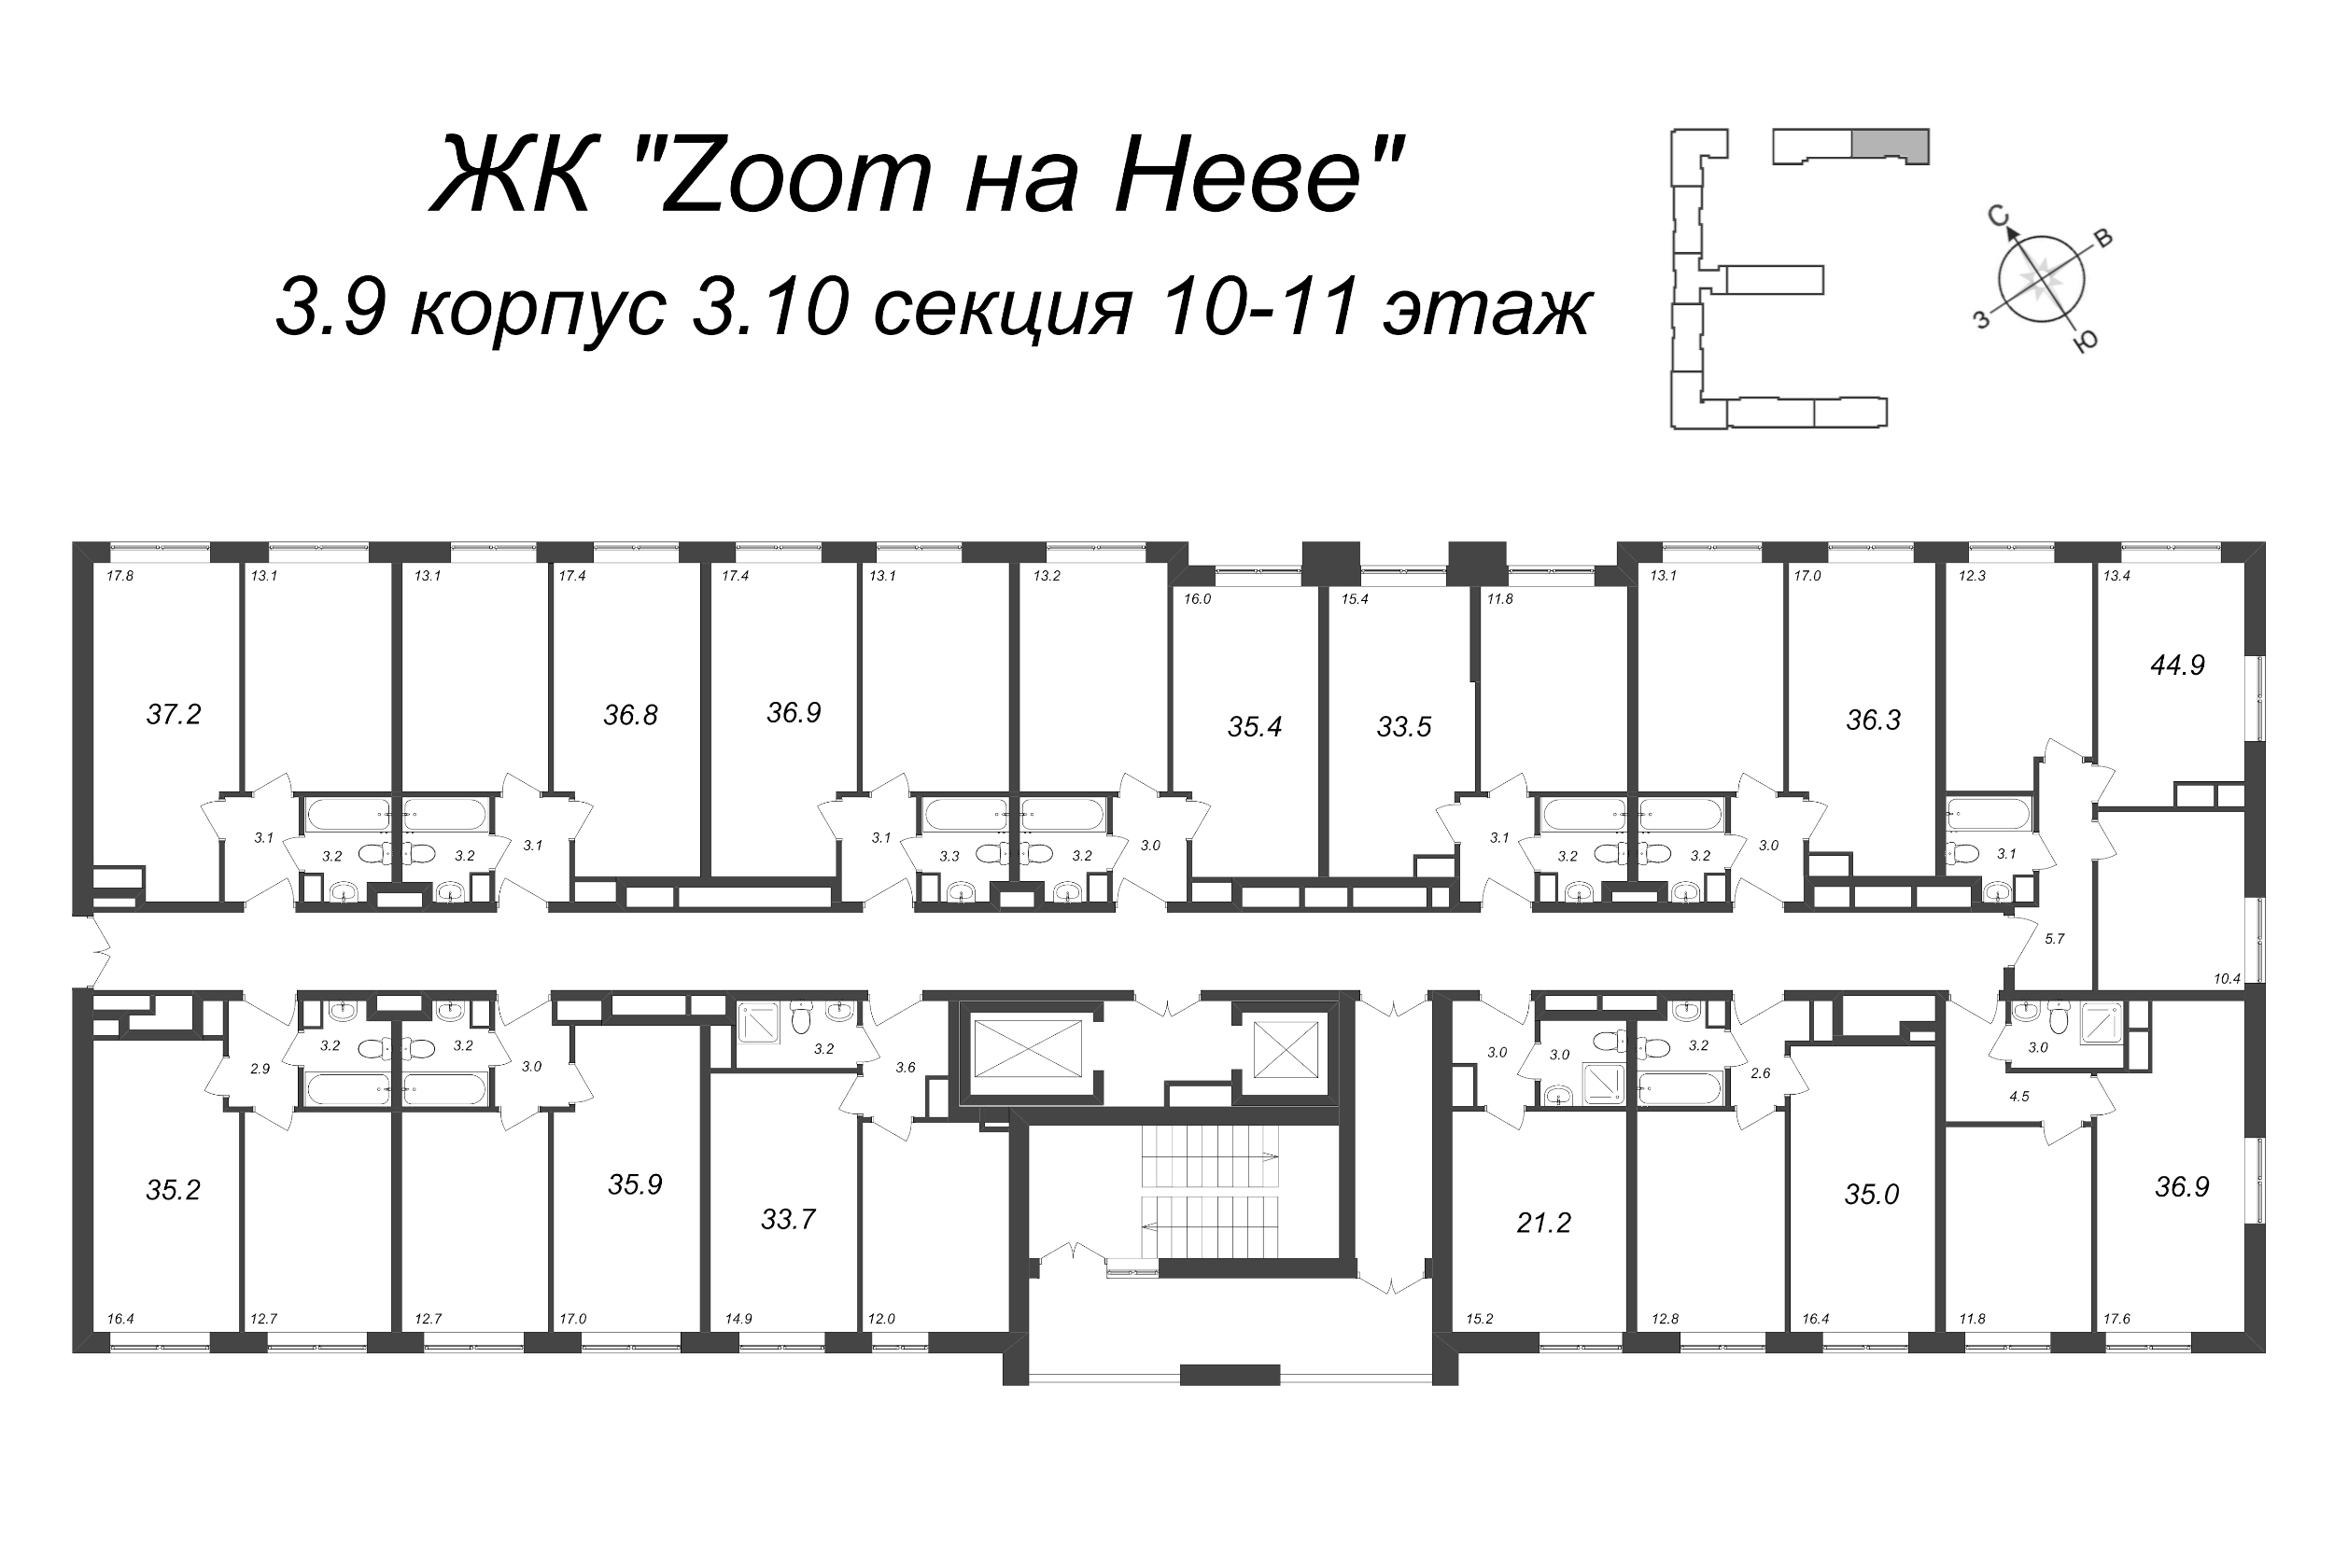 2-комнатная (Евро) квартира, 35.66 м² - планировка этажа